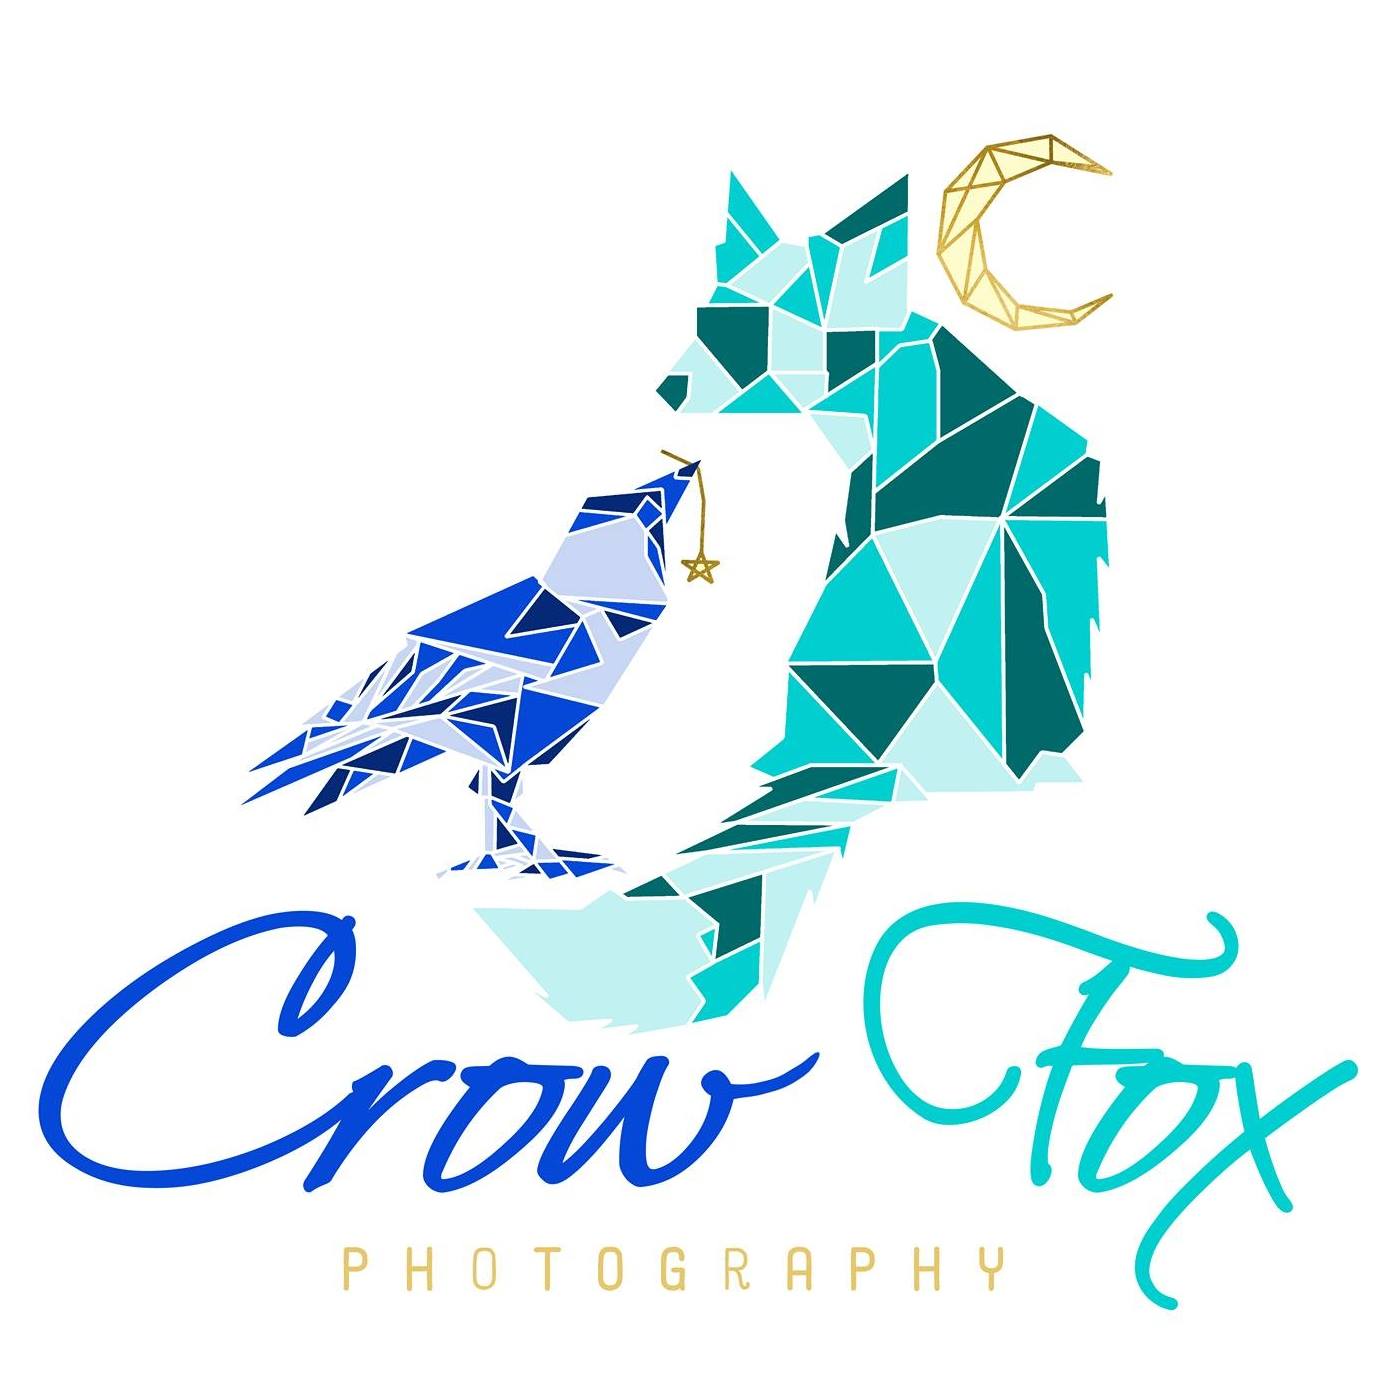 Company logo of Crow Fox Photography